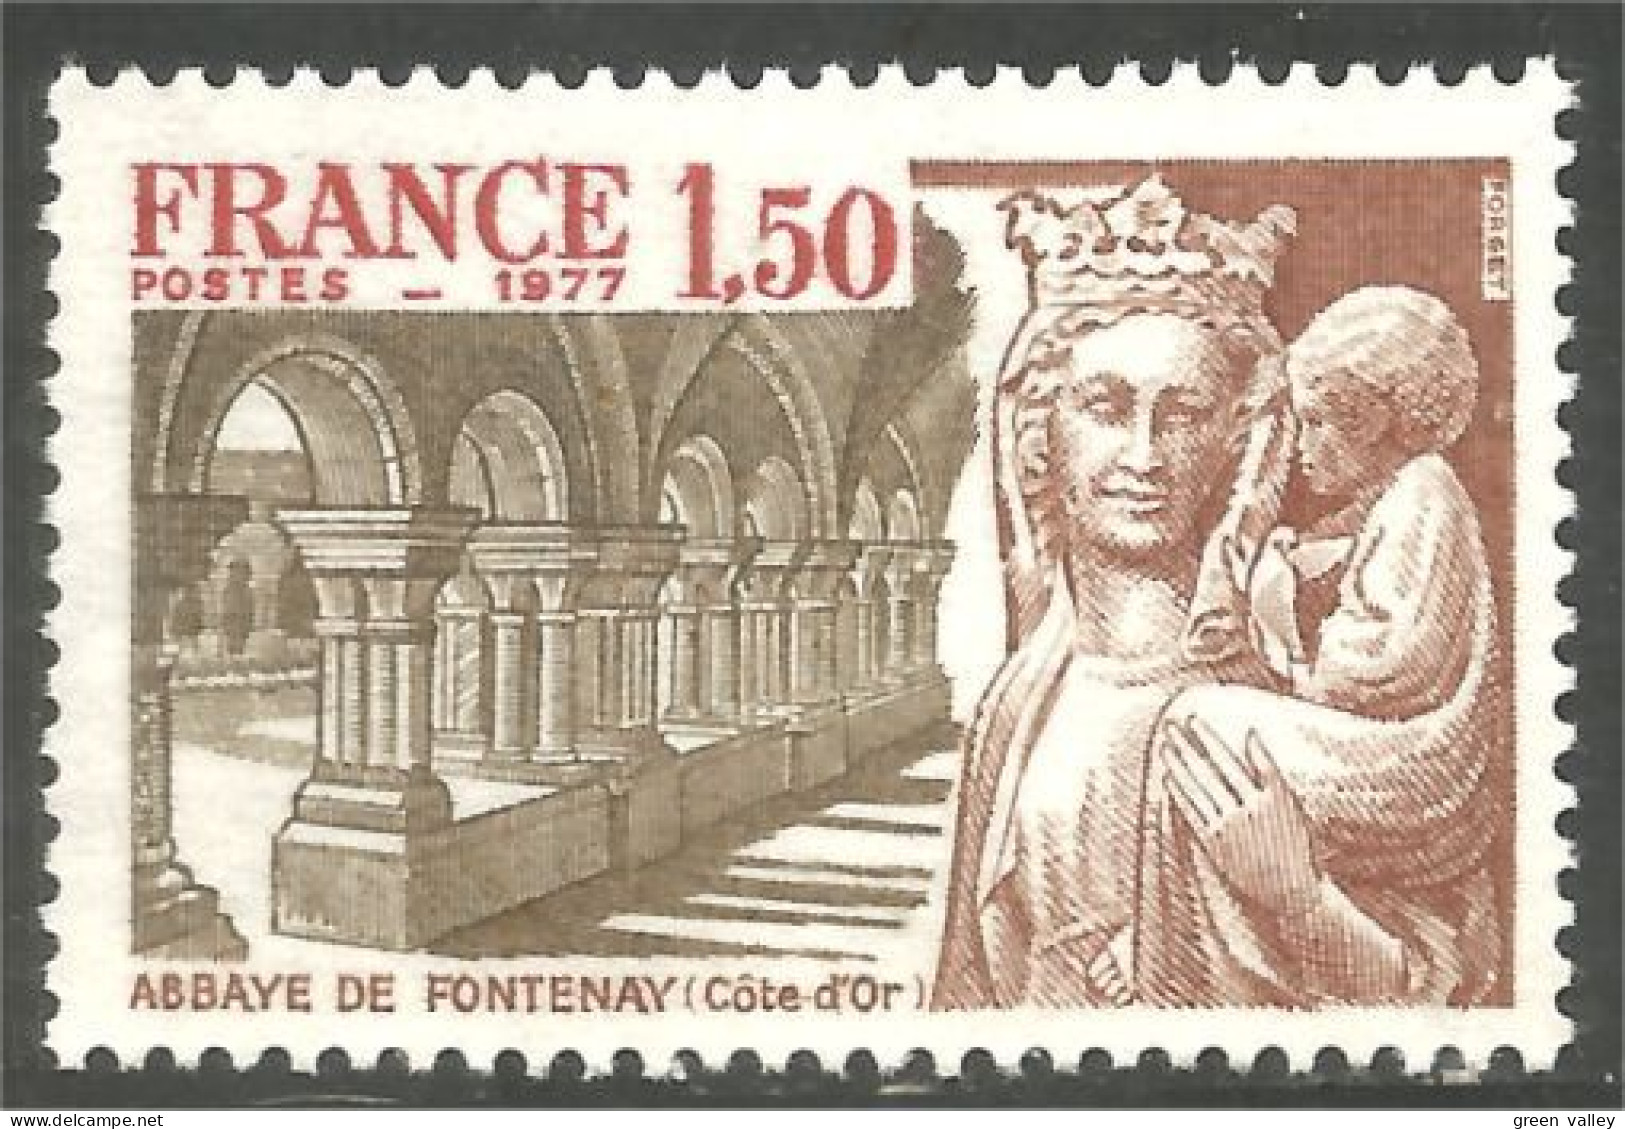 349 France Yv 1938 Abbaye De Fontenay Abbey MNH ** Neuf SC (1938-1b) - Abbeys & Monasteries